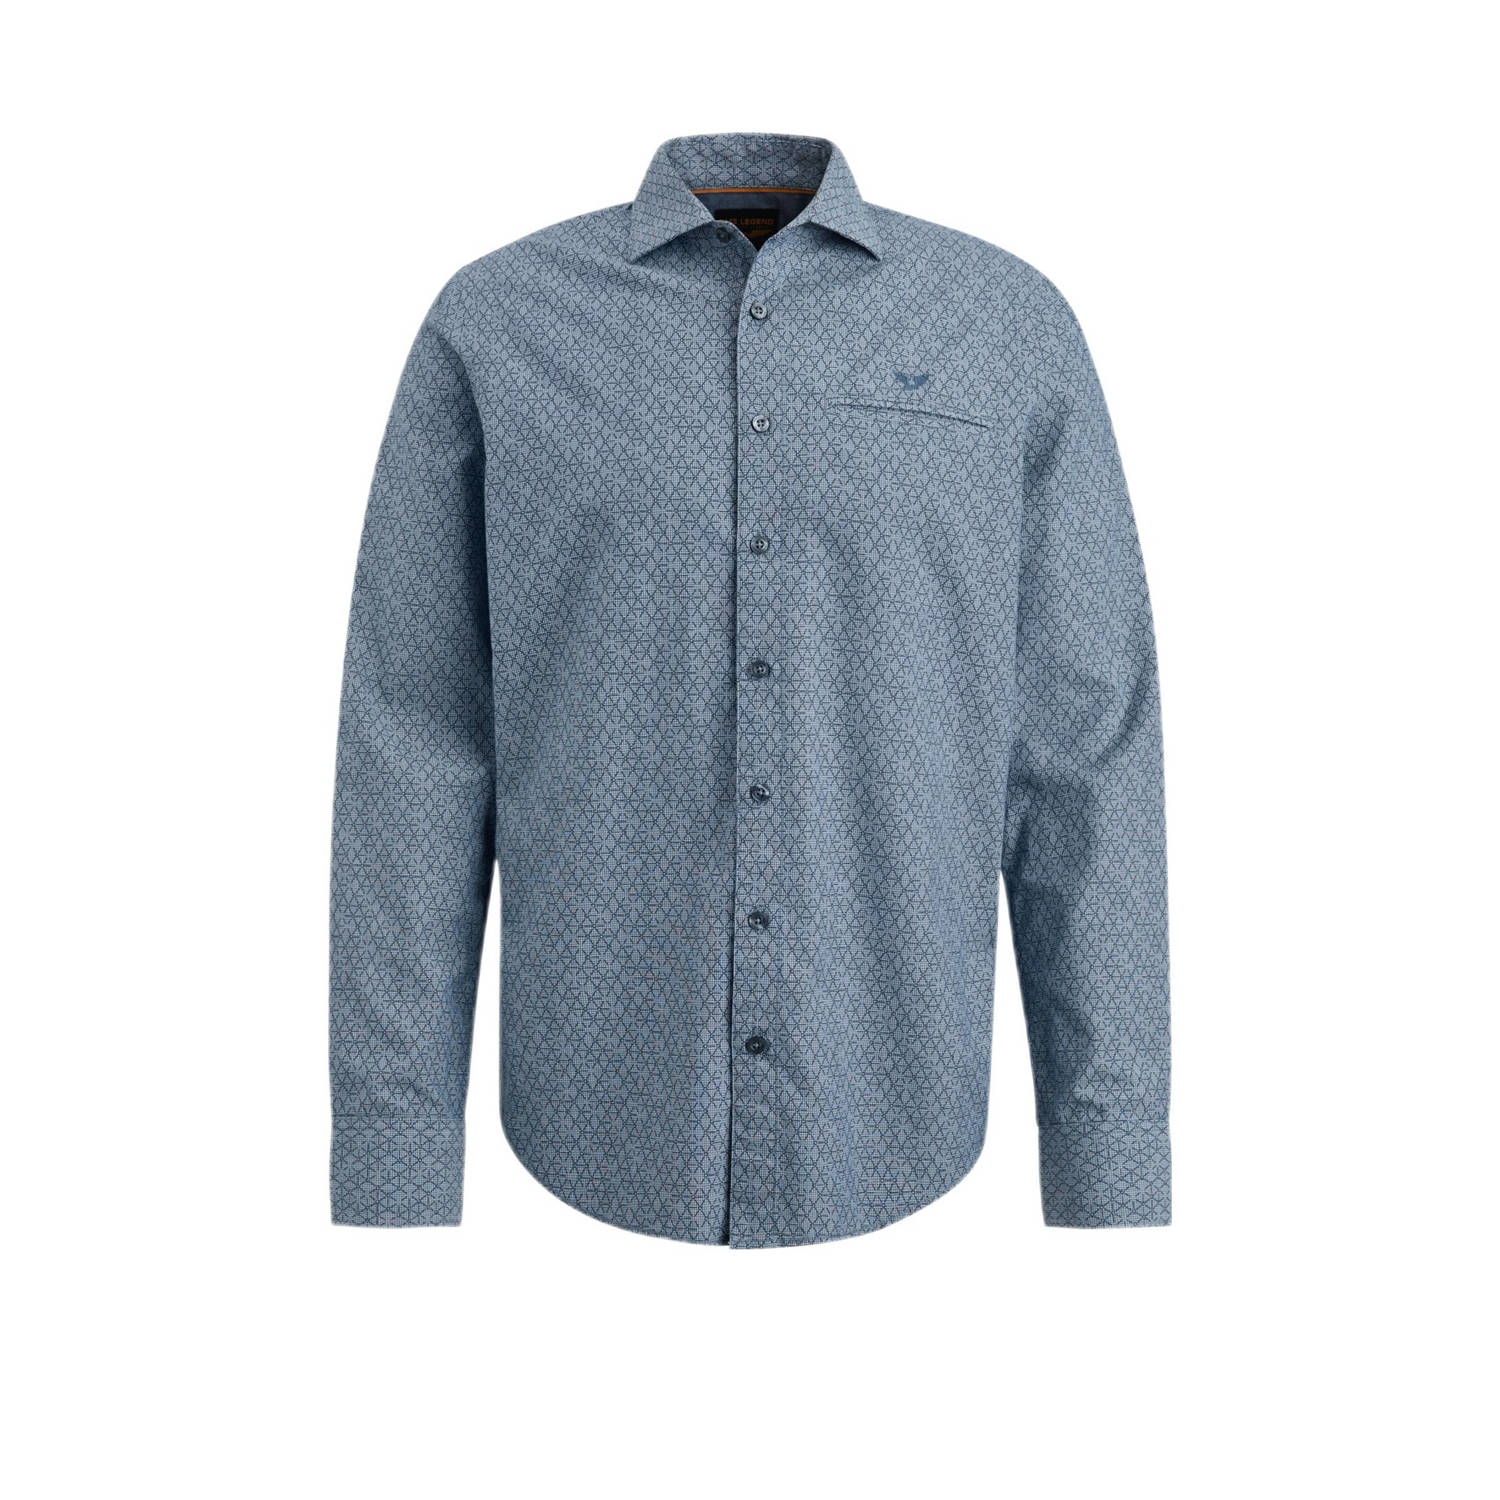 PME Legend slim fit overhemd met all over print blauw